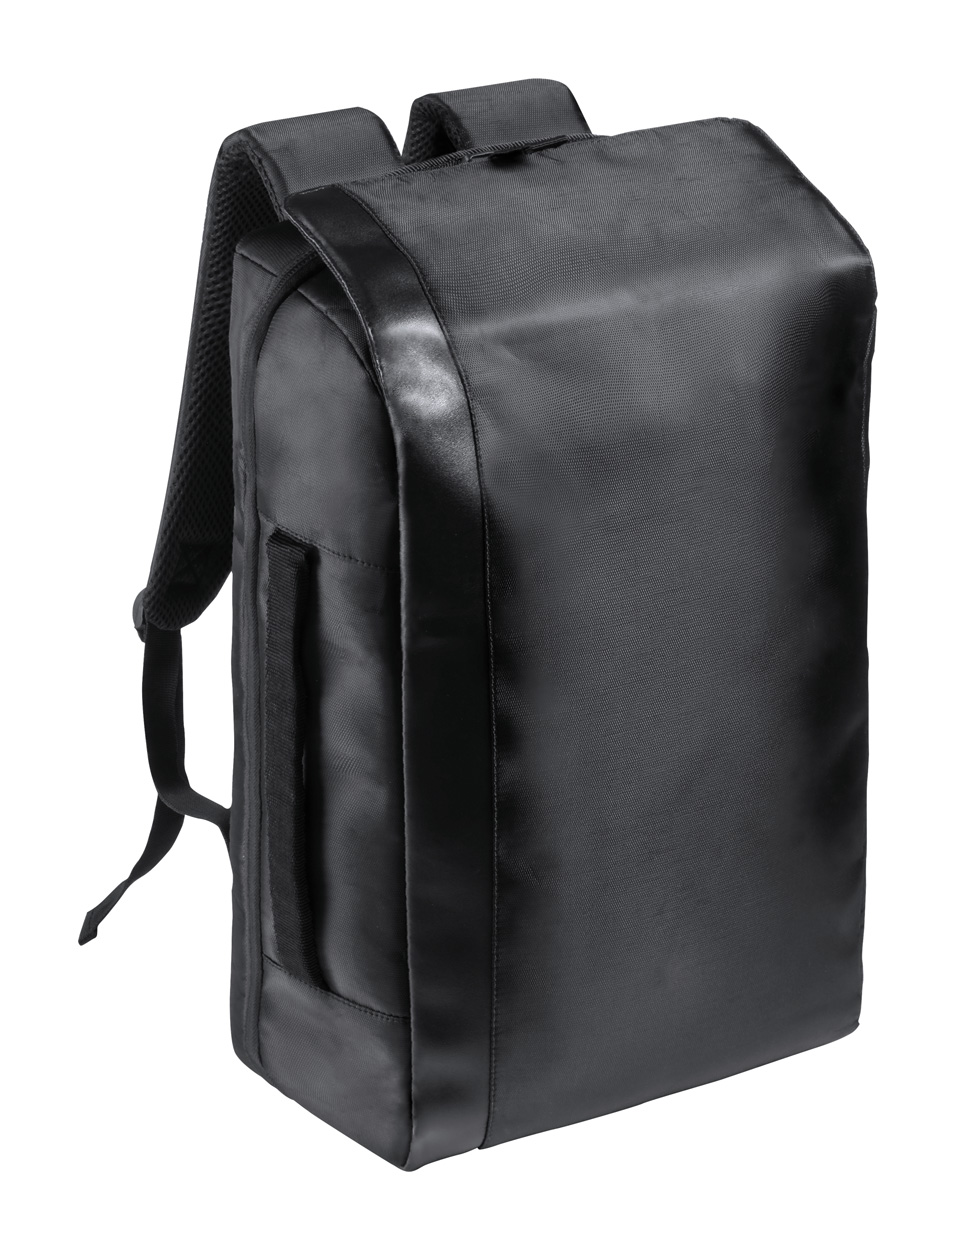 Sleiter backpack for documents - black